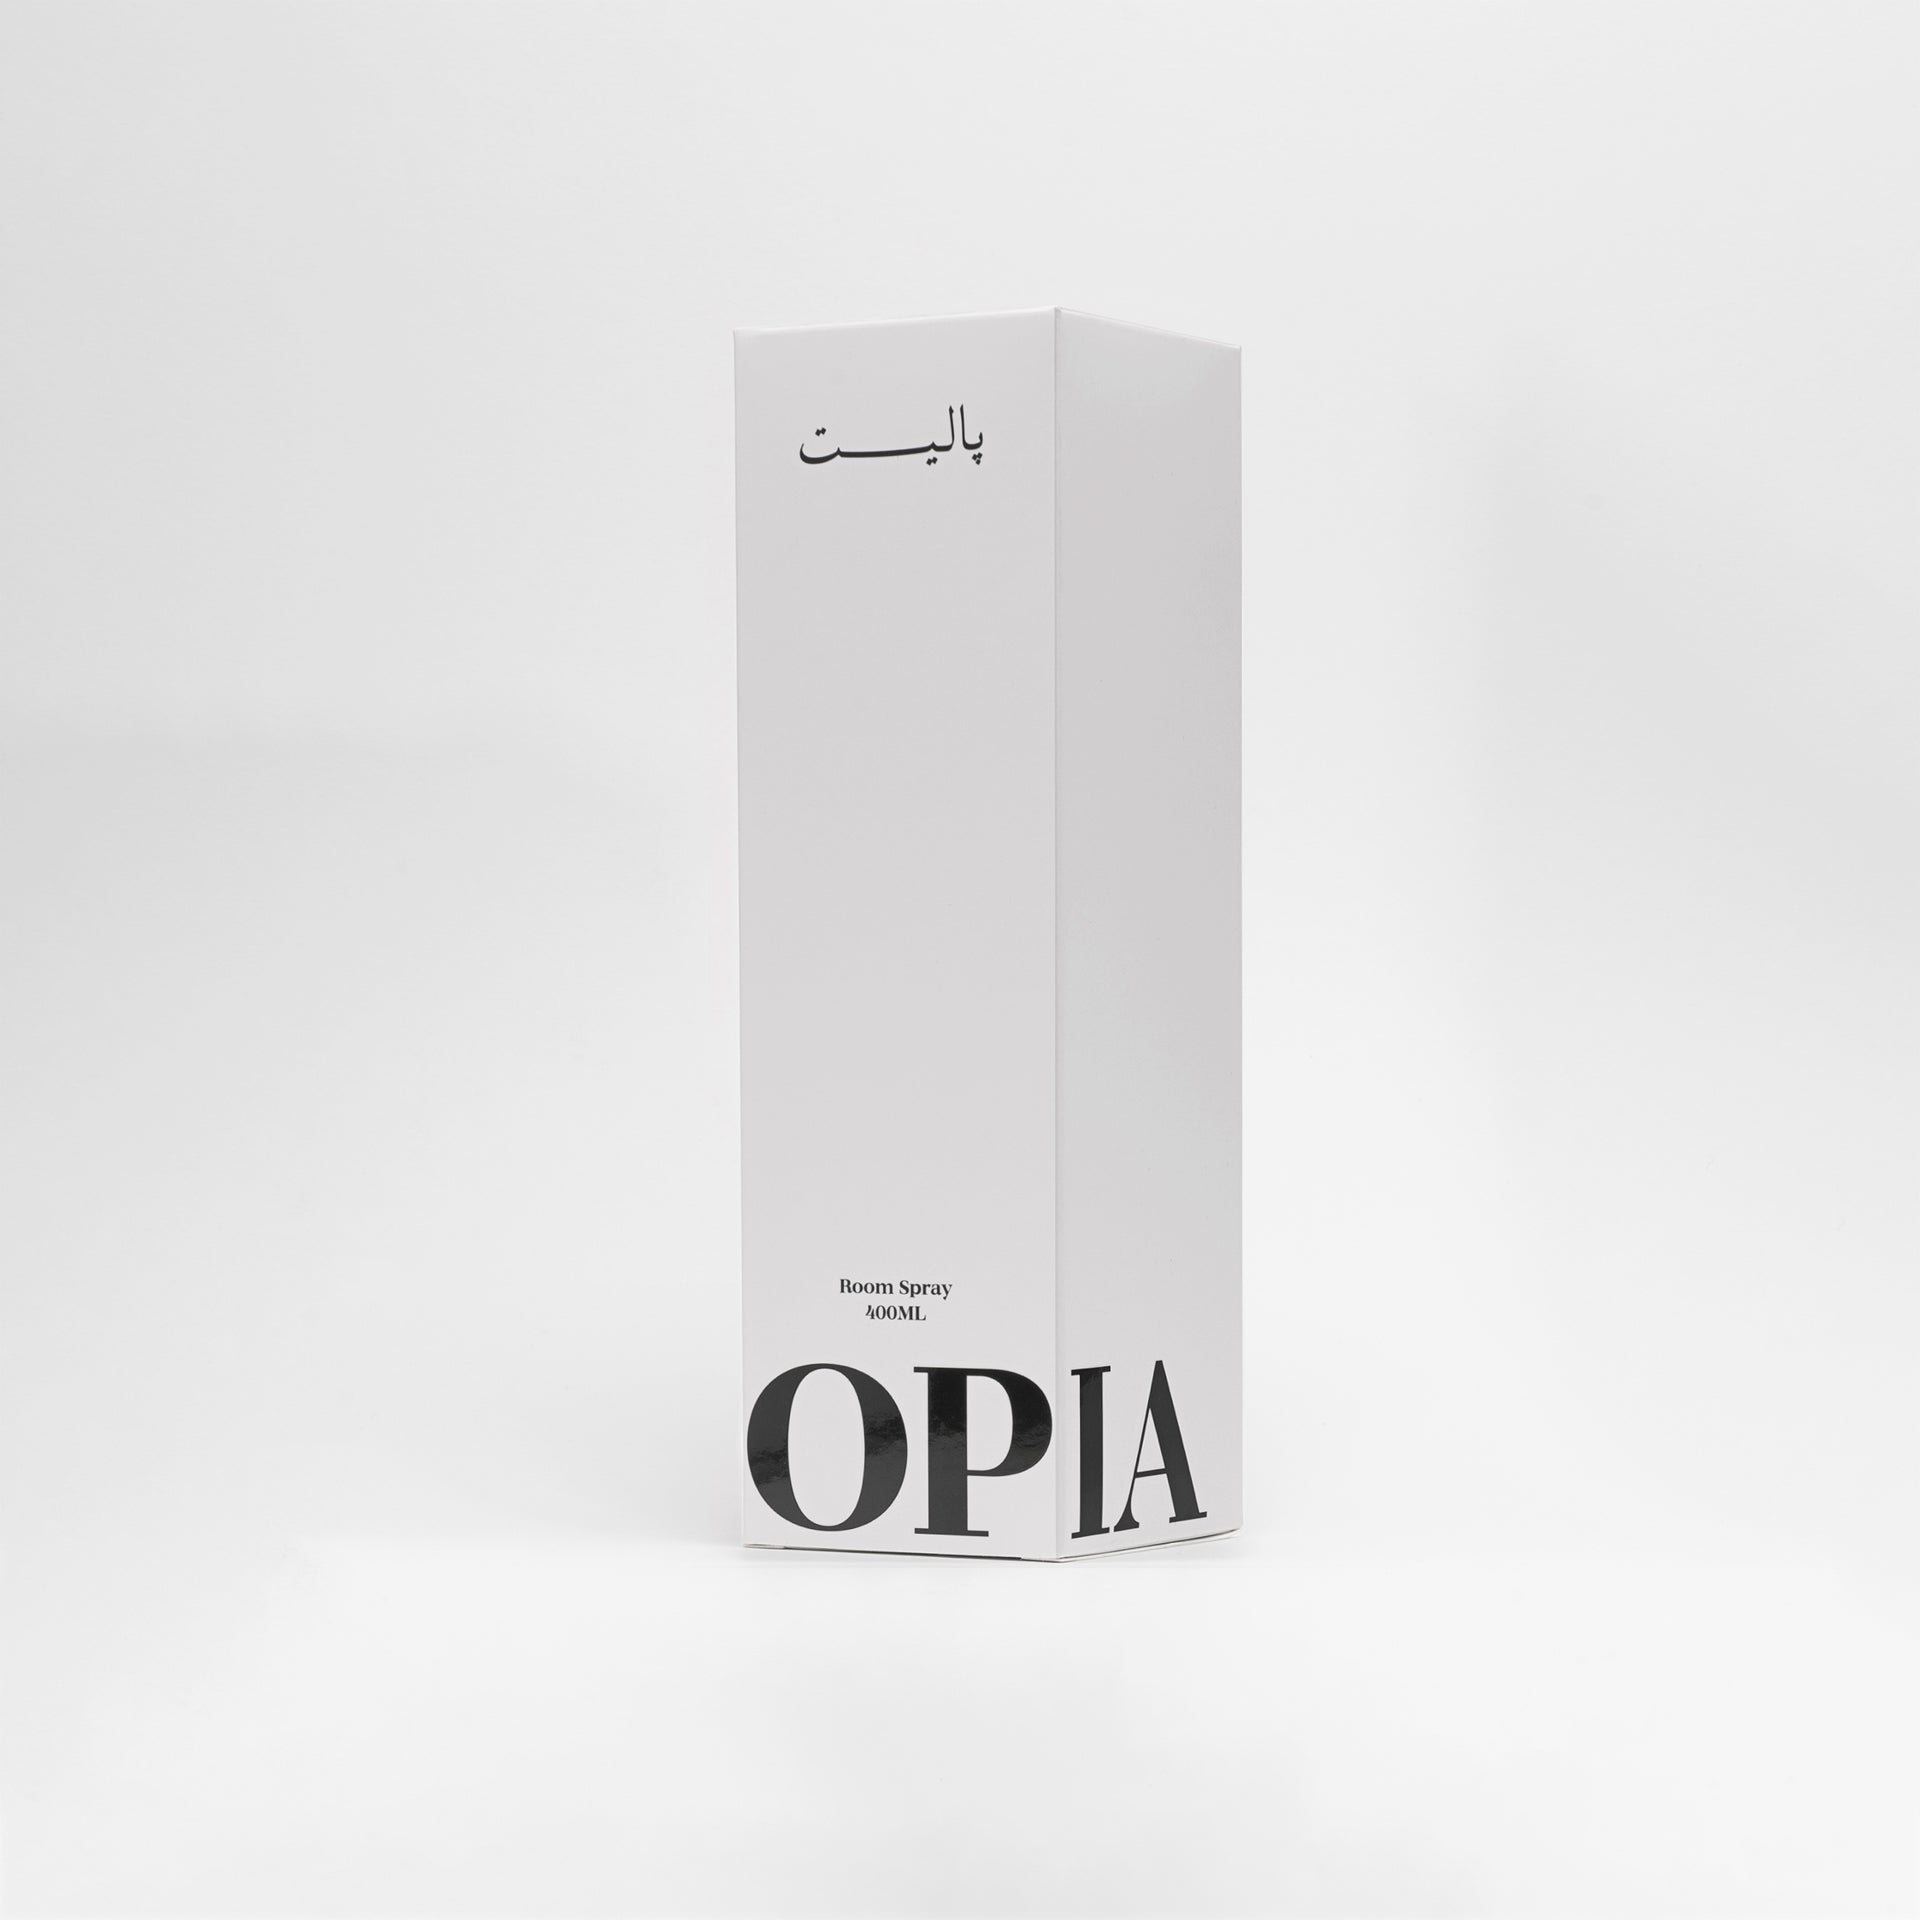 Utopia Room Spray By Palette Perfumes